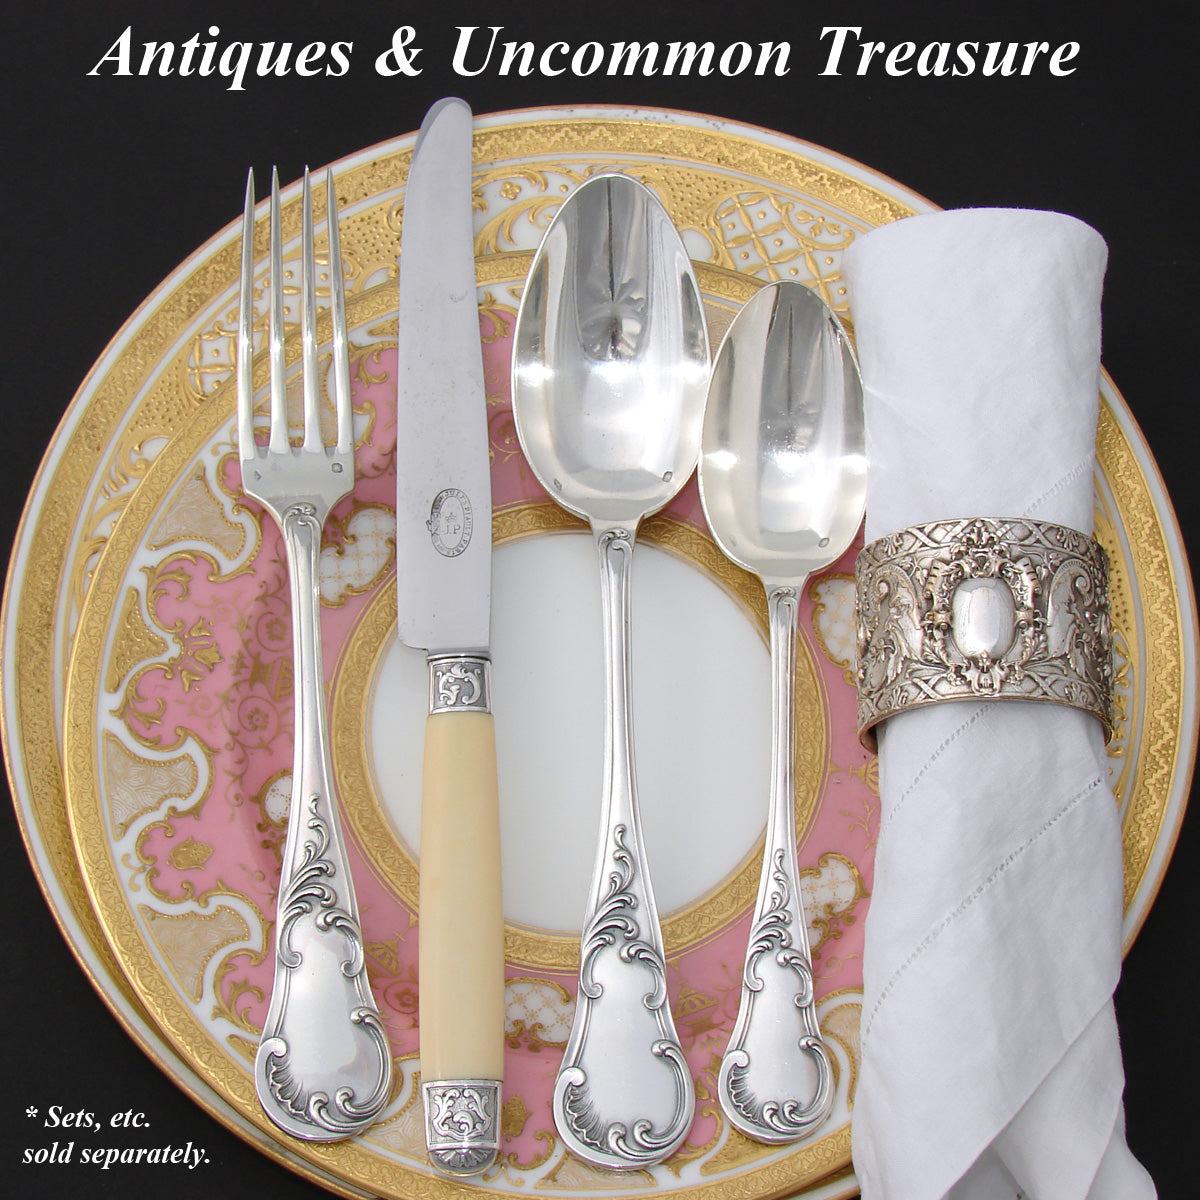 Elegant Antique French 12pc Dinner Knife Set, Genuine Ivory & Silver Handles